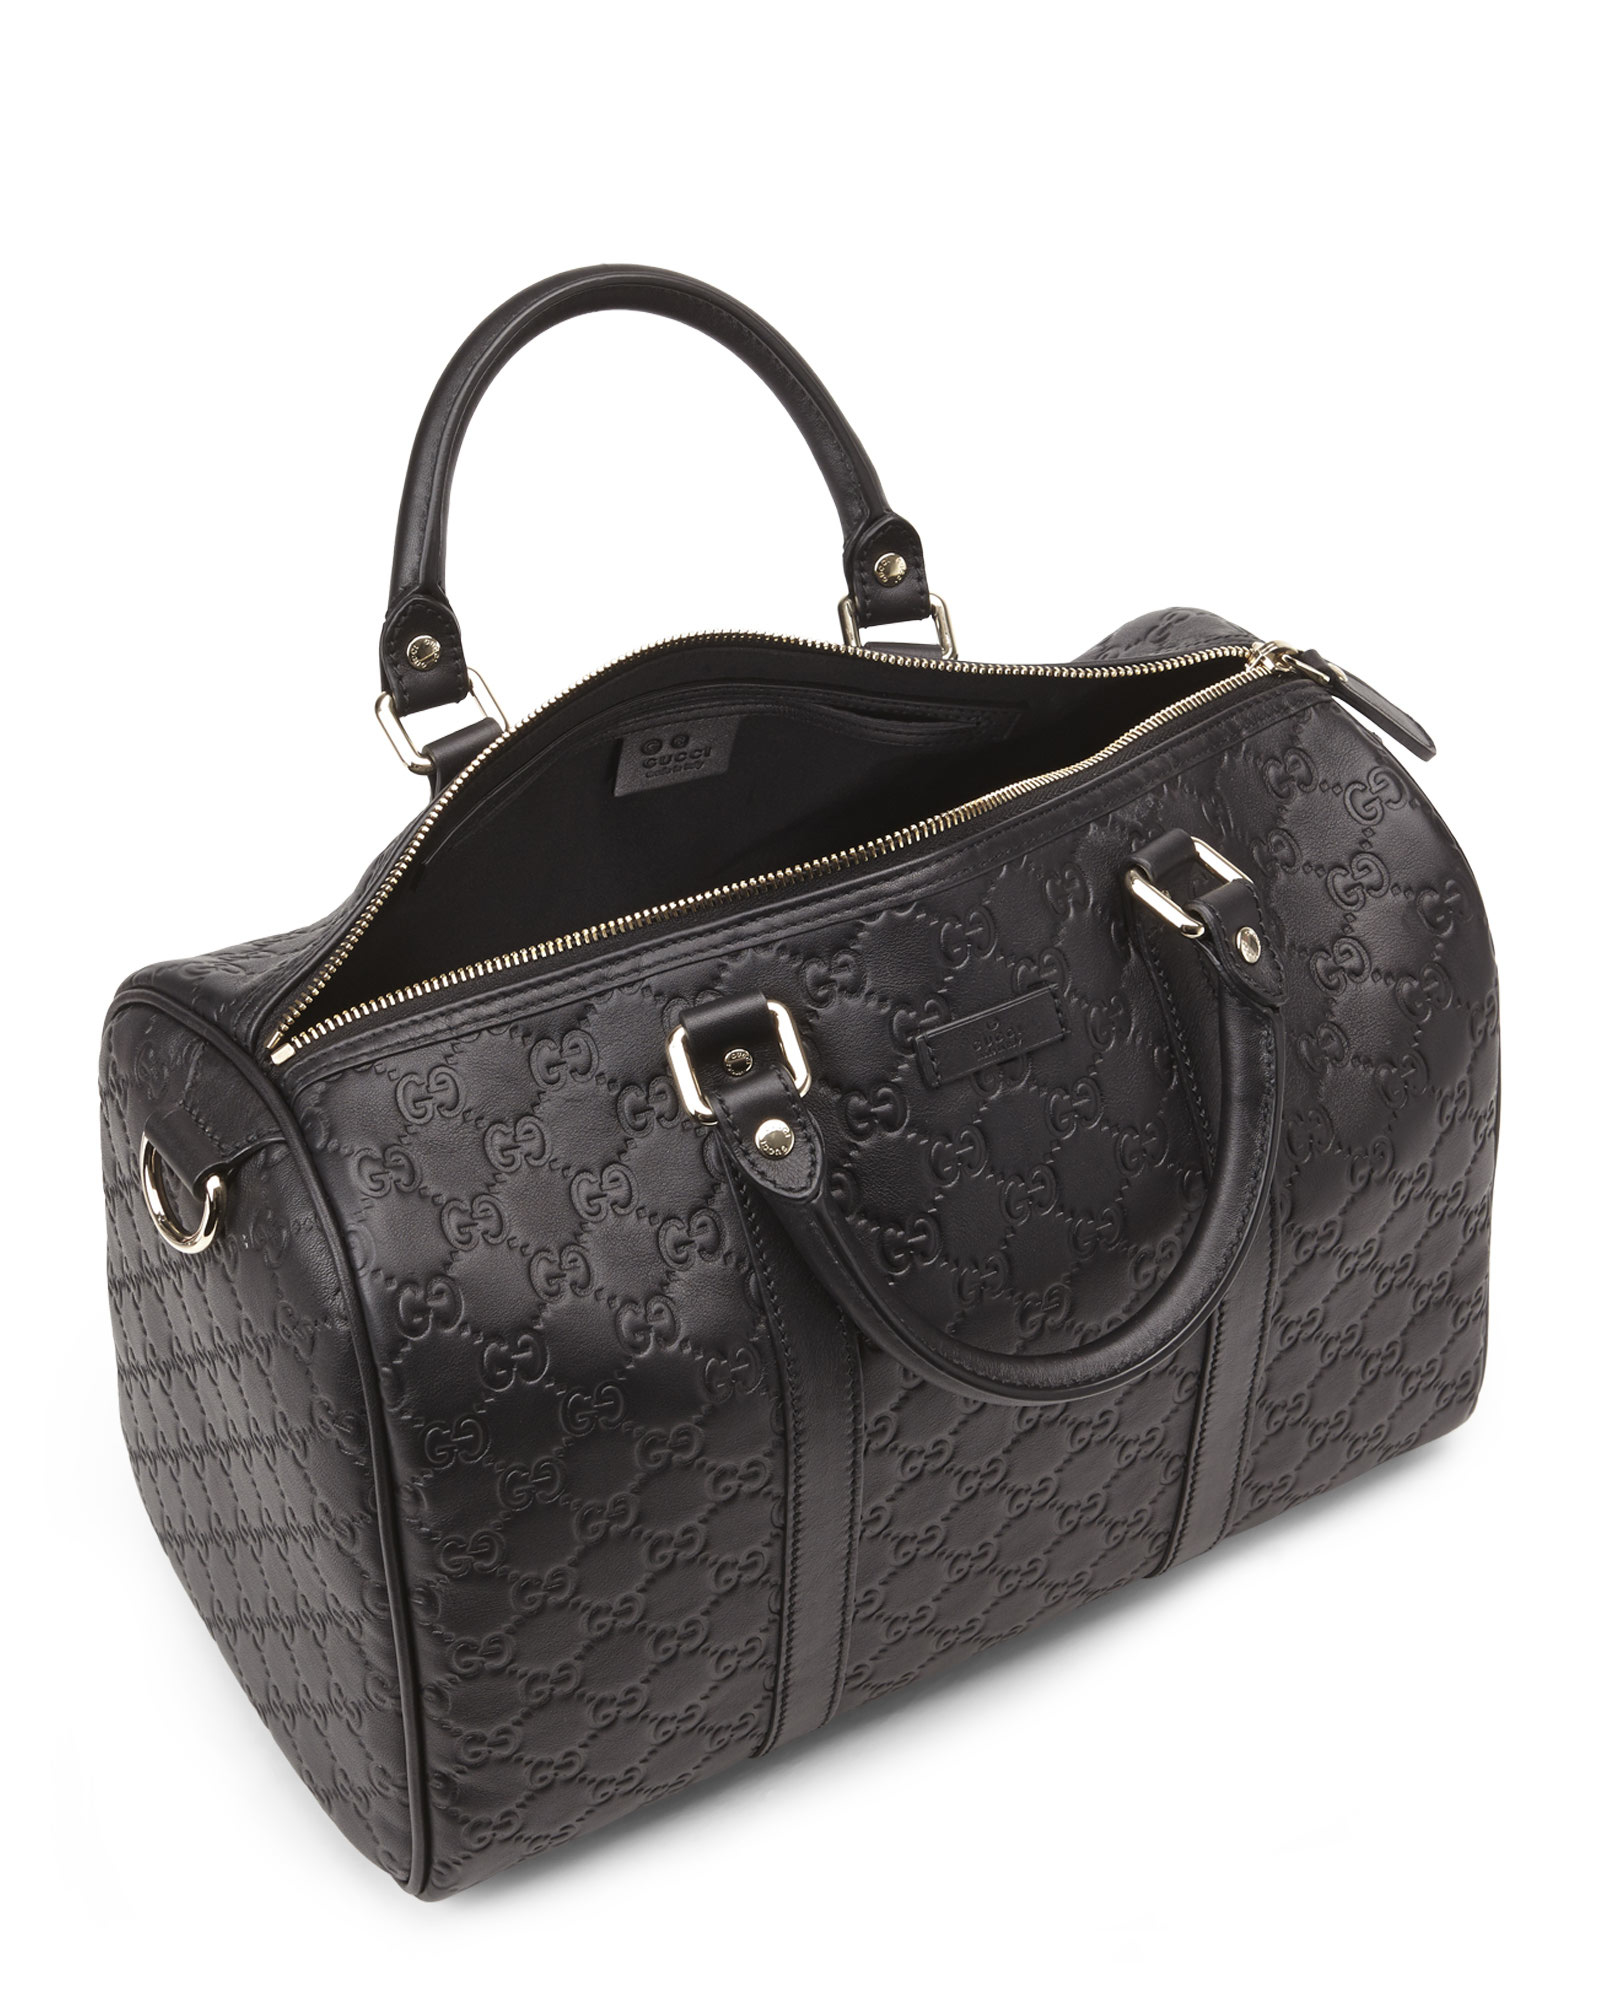 Lyst - Gucci Black Ssima Joy Boston Bag in Black